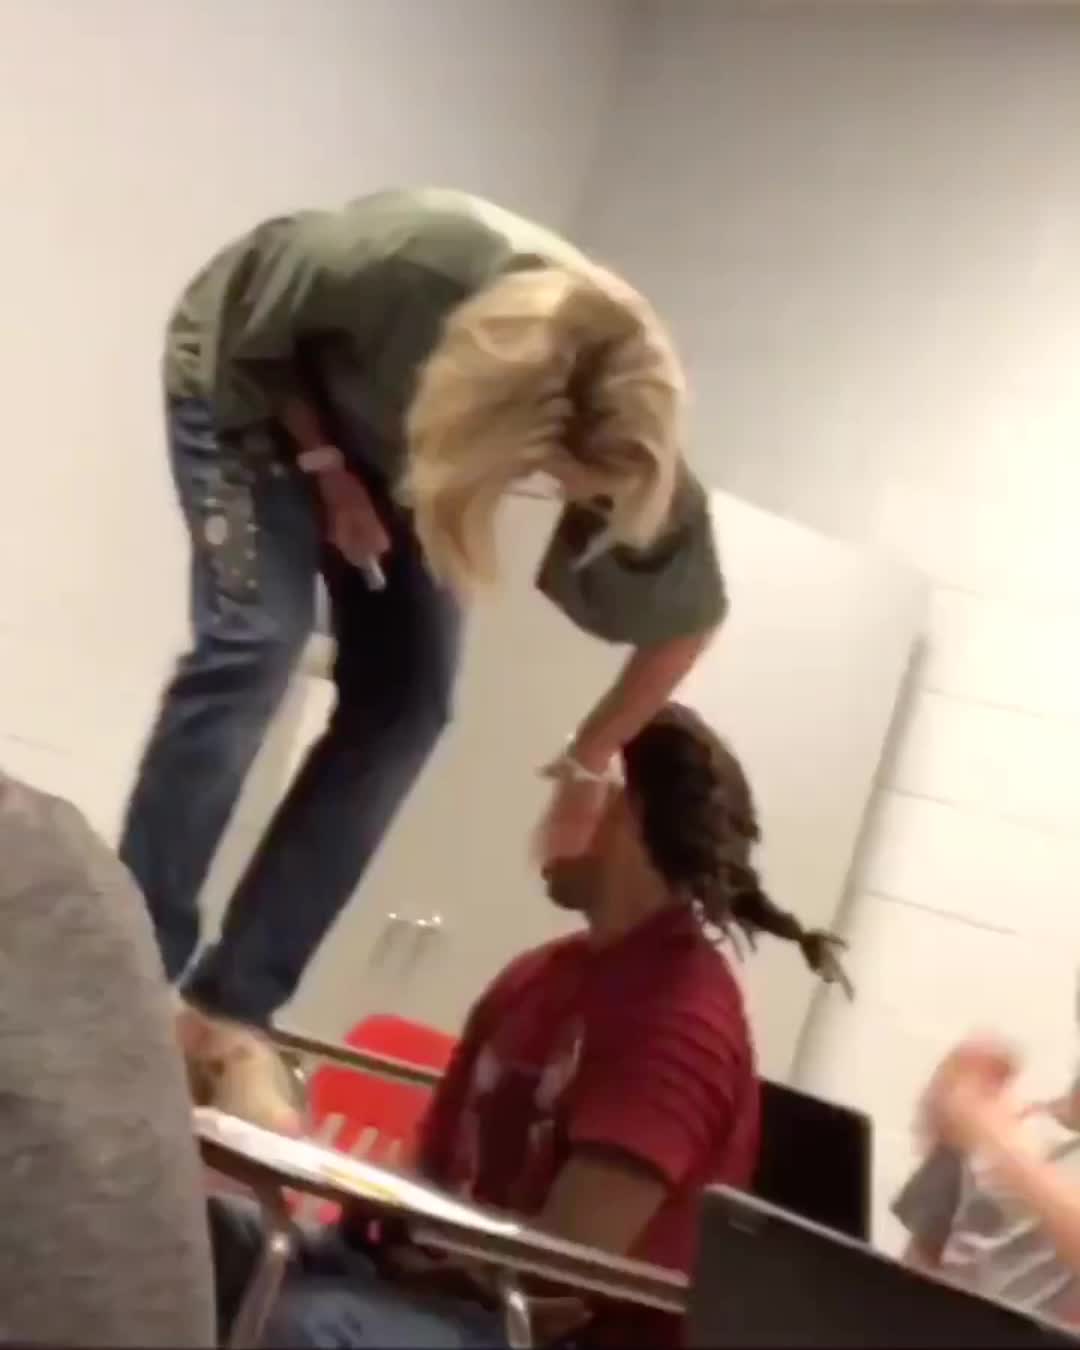 Video Shows South Carolina Teacher Using Her Foot to Wake Sleeping Student